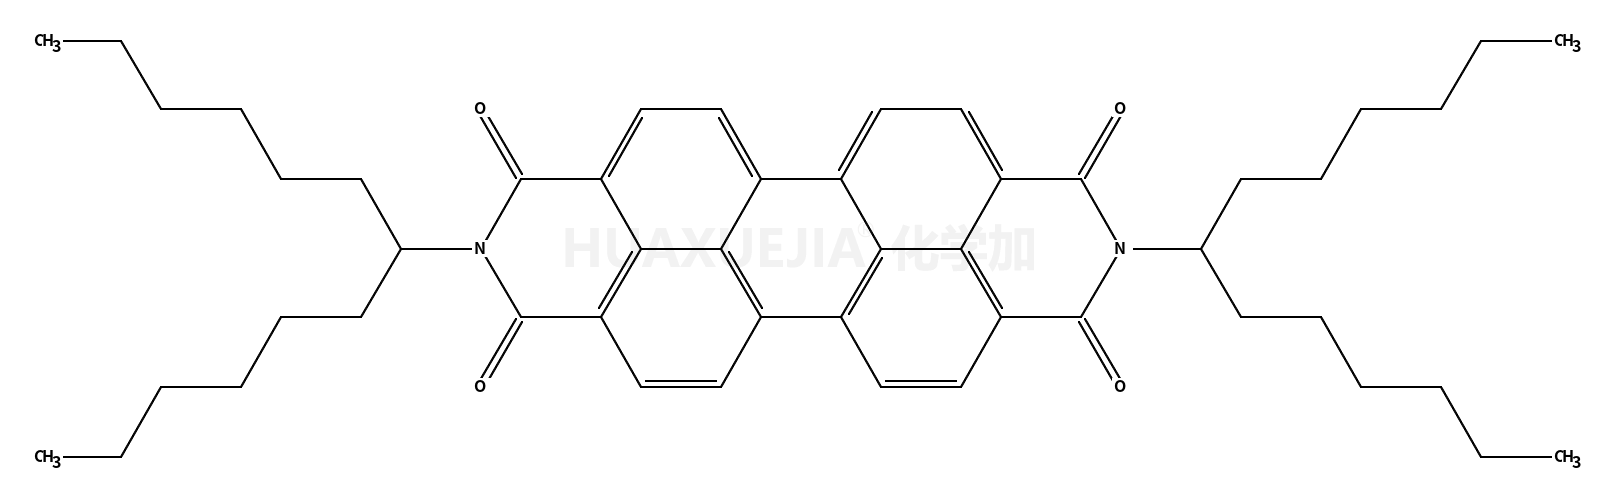 2,9-bis-(1-hexylheptyl)anthra[2,1,9-def ,6,5,10-d'e'f']diisoquinoline-1,3,8,10-tetraone